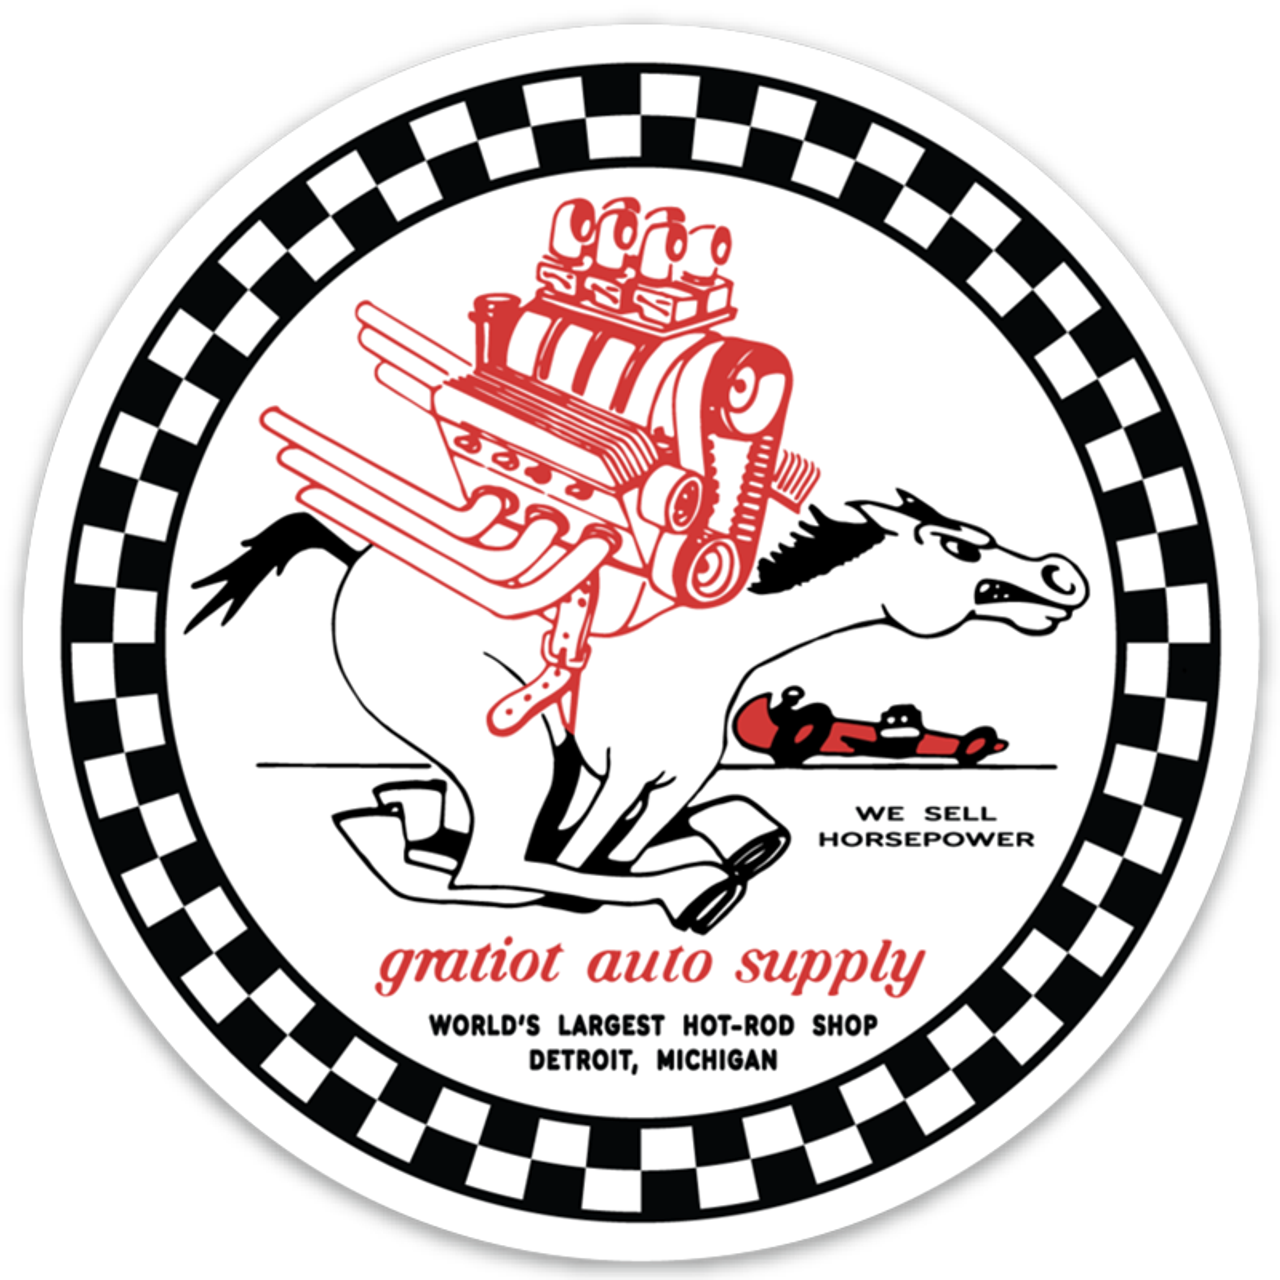 Classic Ford Logo Vinyl Sticker - 4 Round